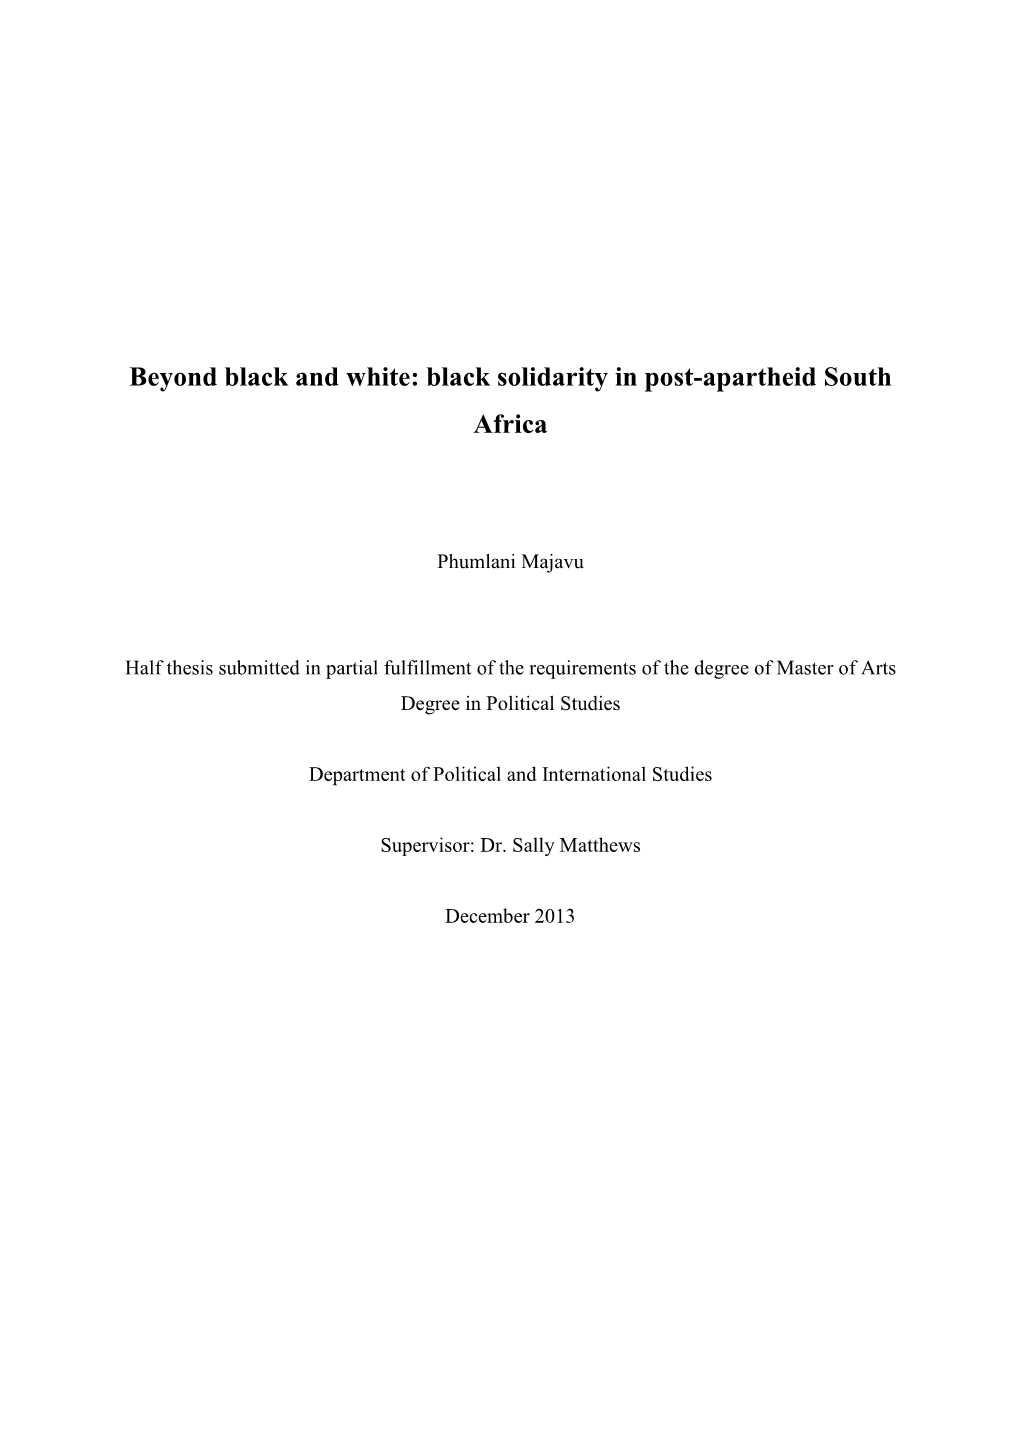 Black Solidarity in Post-Apartheid South Africa